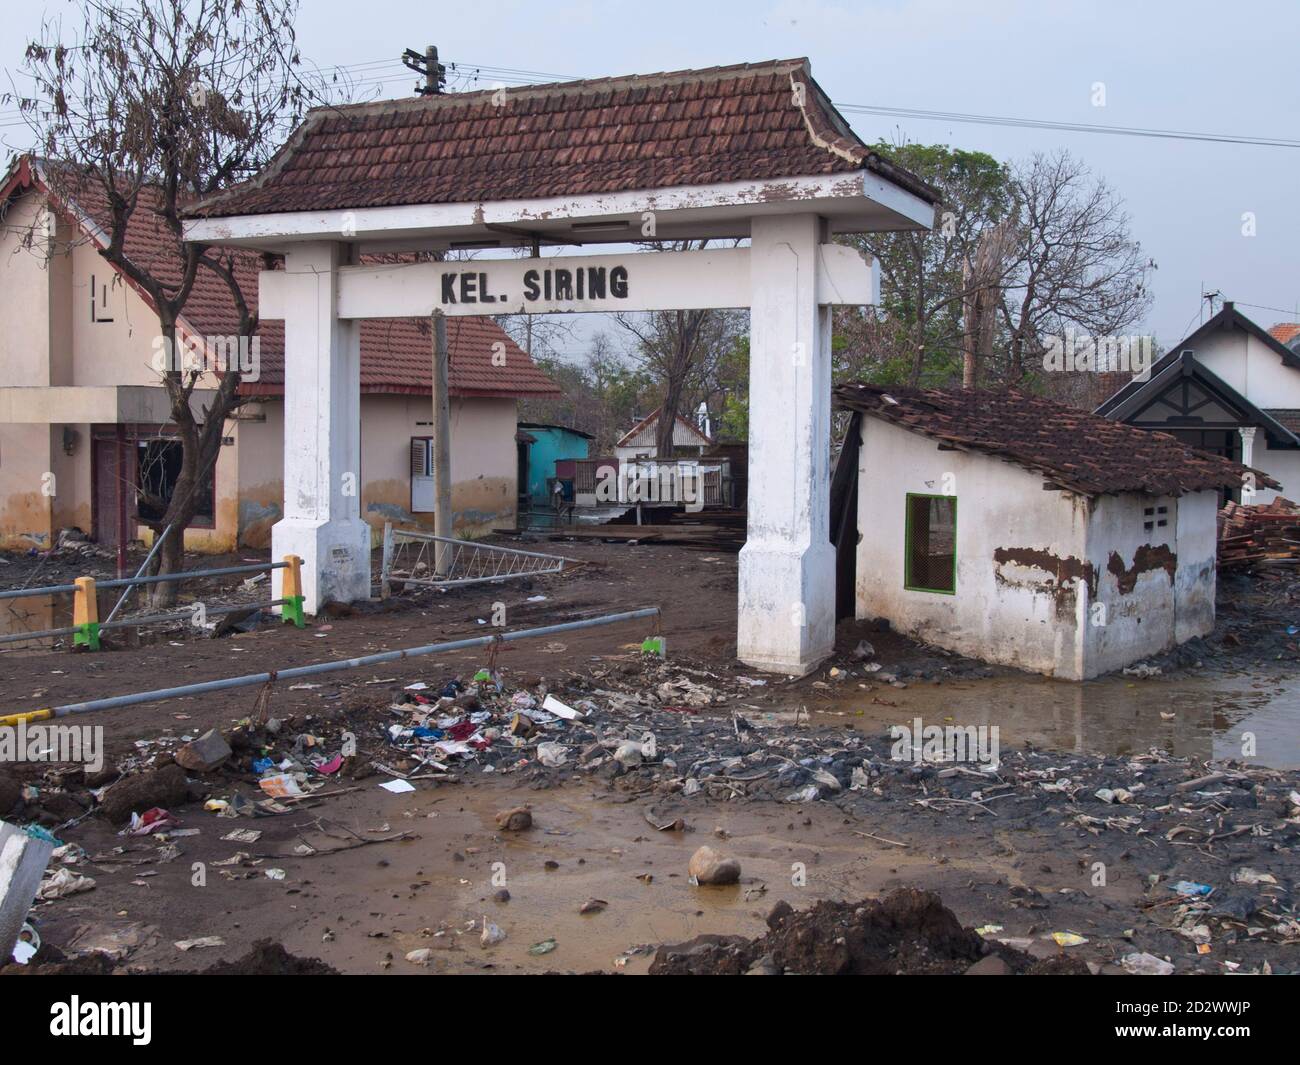 SIRING, SURABAYA, JAVA, INDONESIA - FEB 22, 2007: The gate of the destroyed village of Siring near Surabaya,  Java, Indonesia . Stock Photo